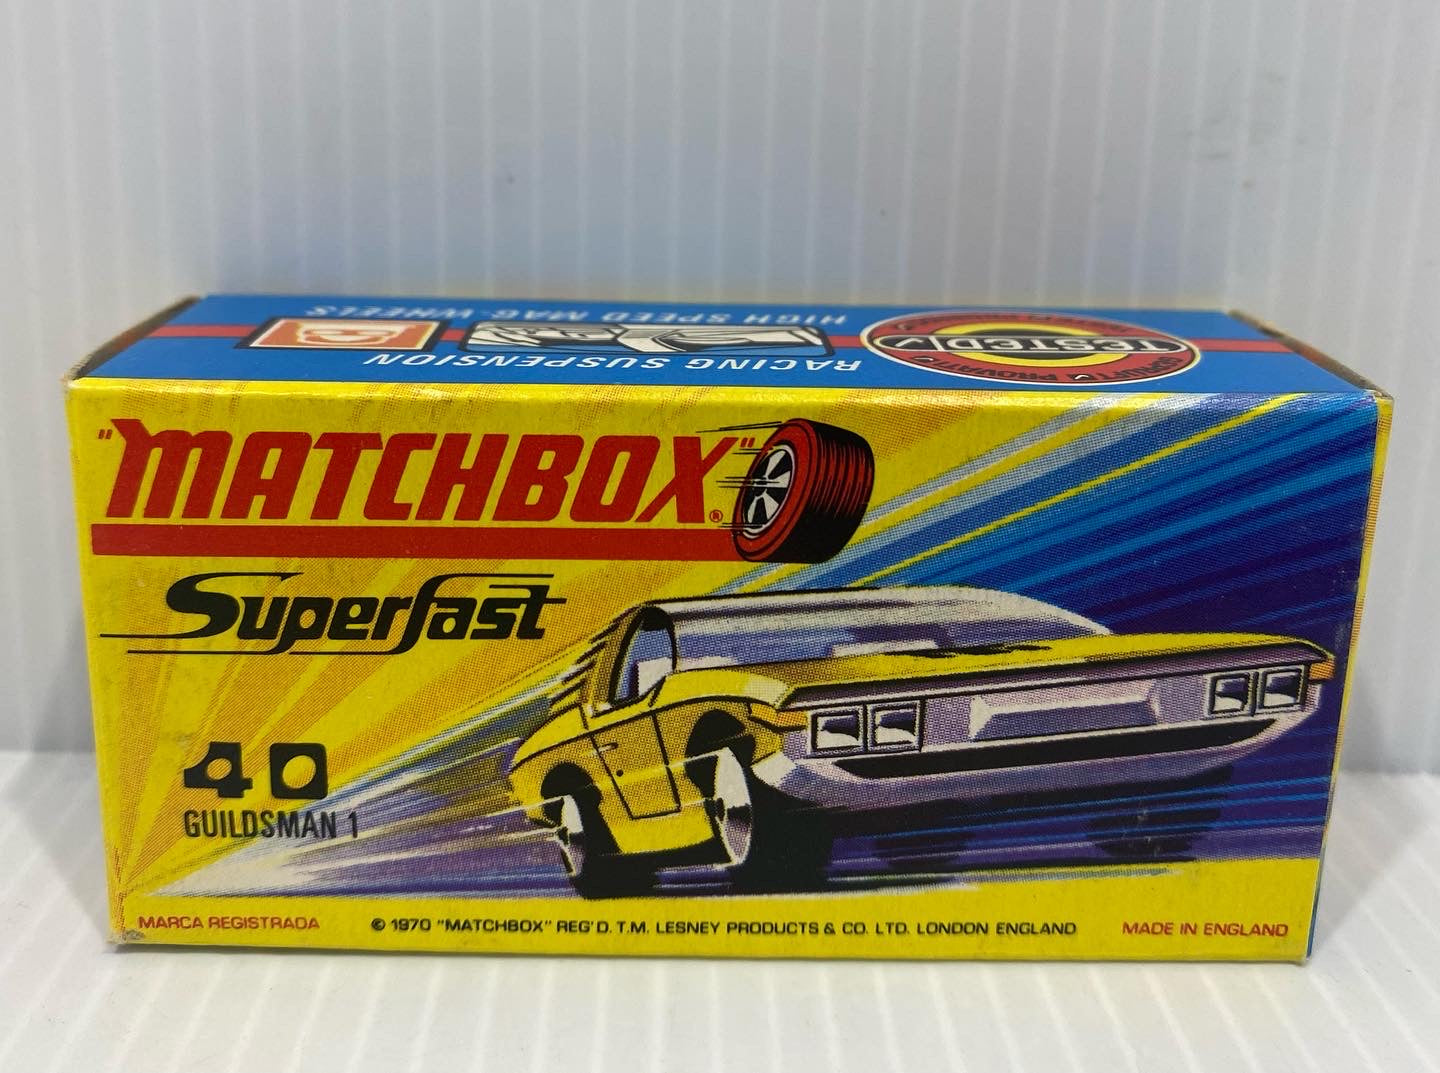 Guildsman - Matchbox MB40 1971-1975. With original box